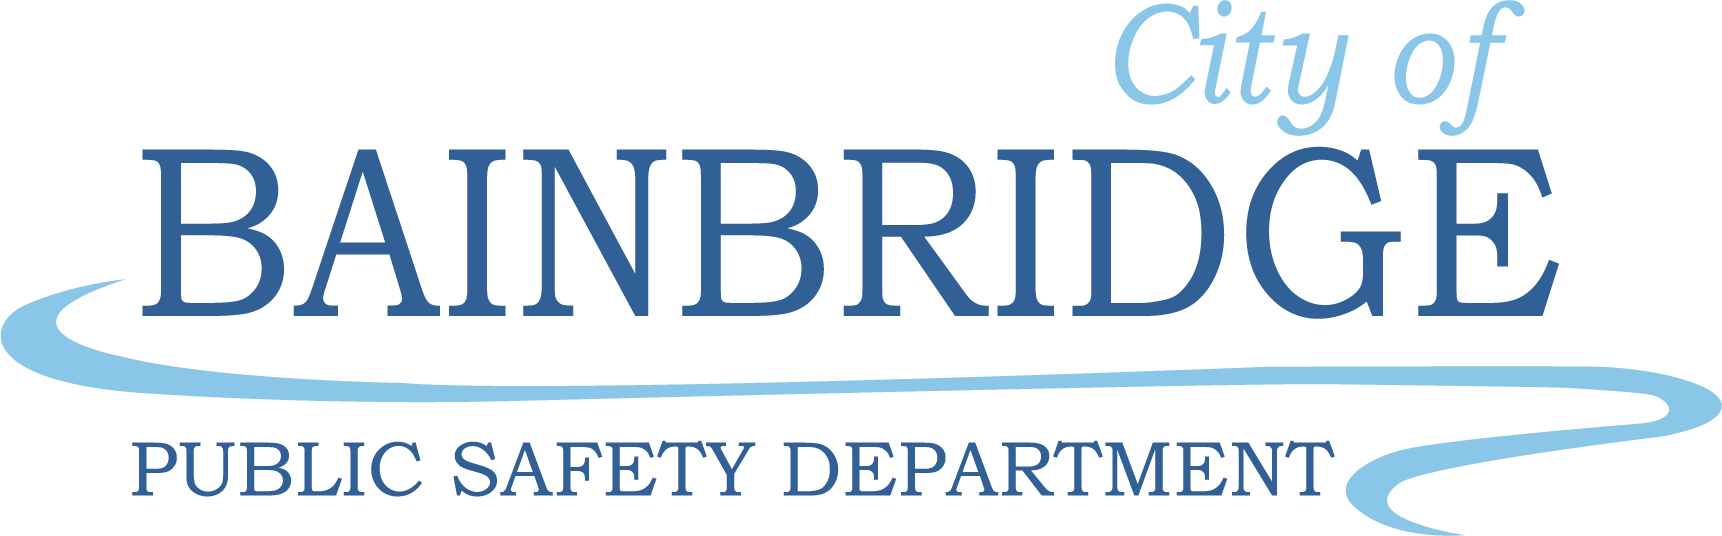 Bainbridge Public Safety Department, GA Police Jobs